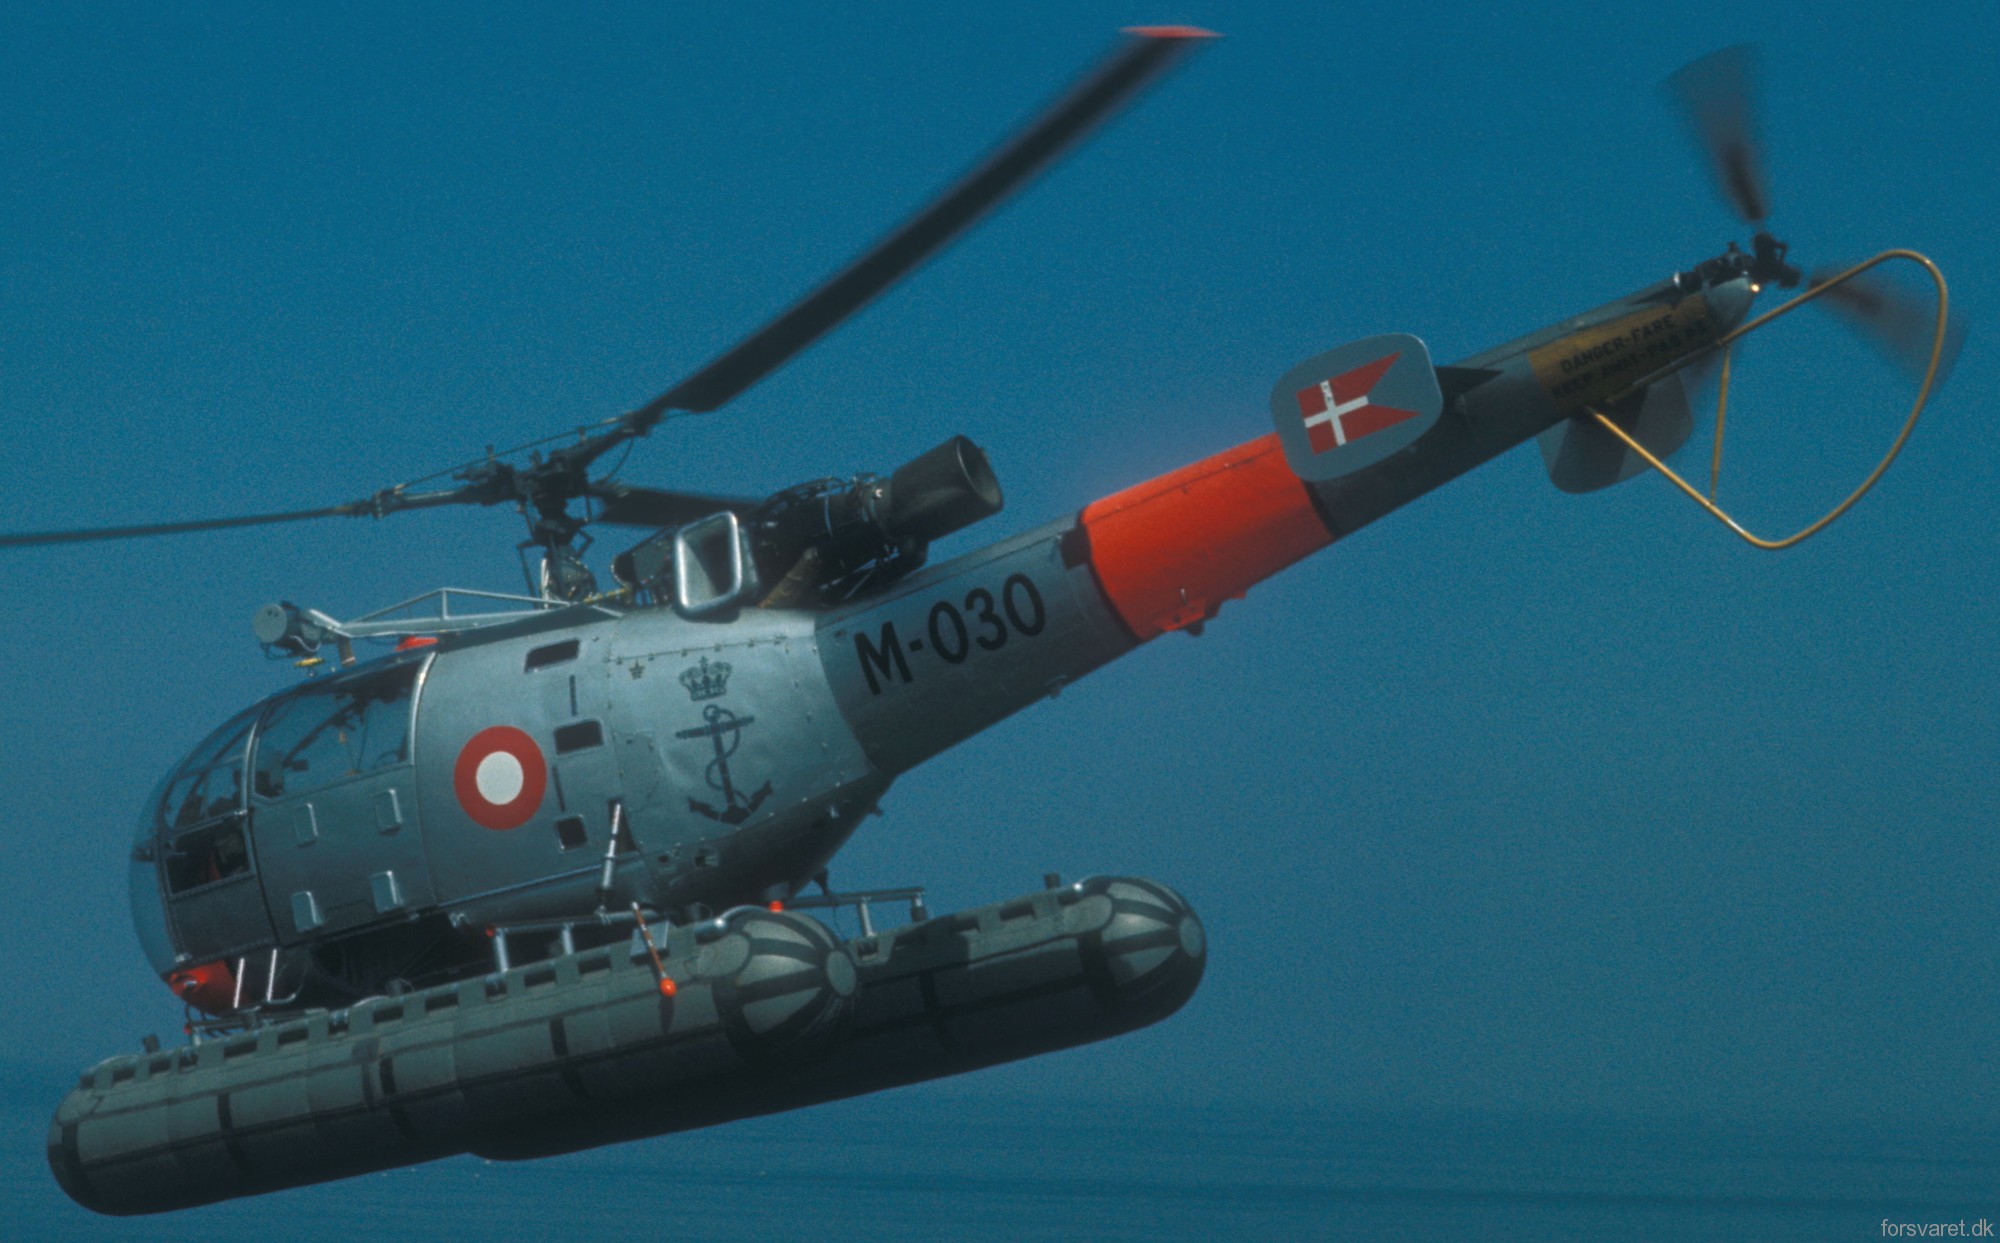 sa 316b alouette iii helicopter royal danish navy søværnet kongelige danske marine sud aviation m-030 03